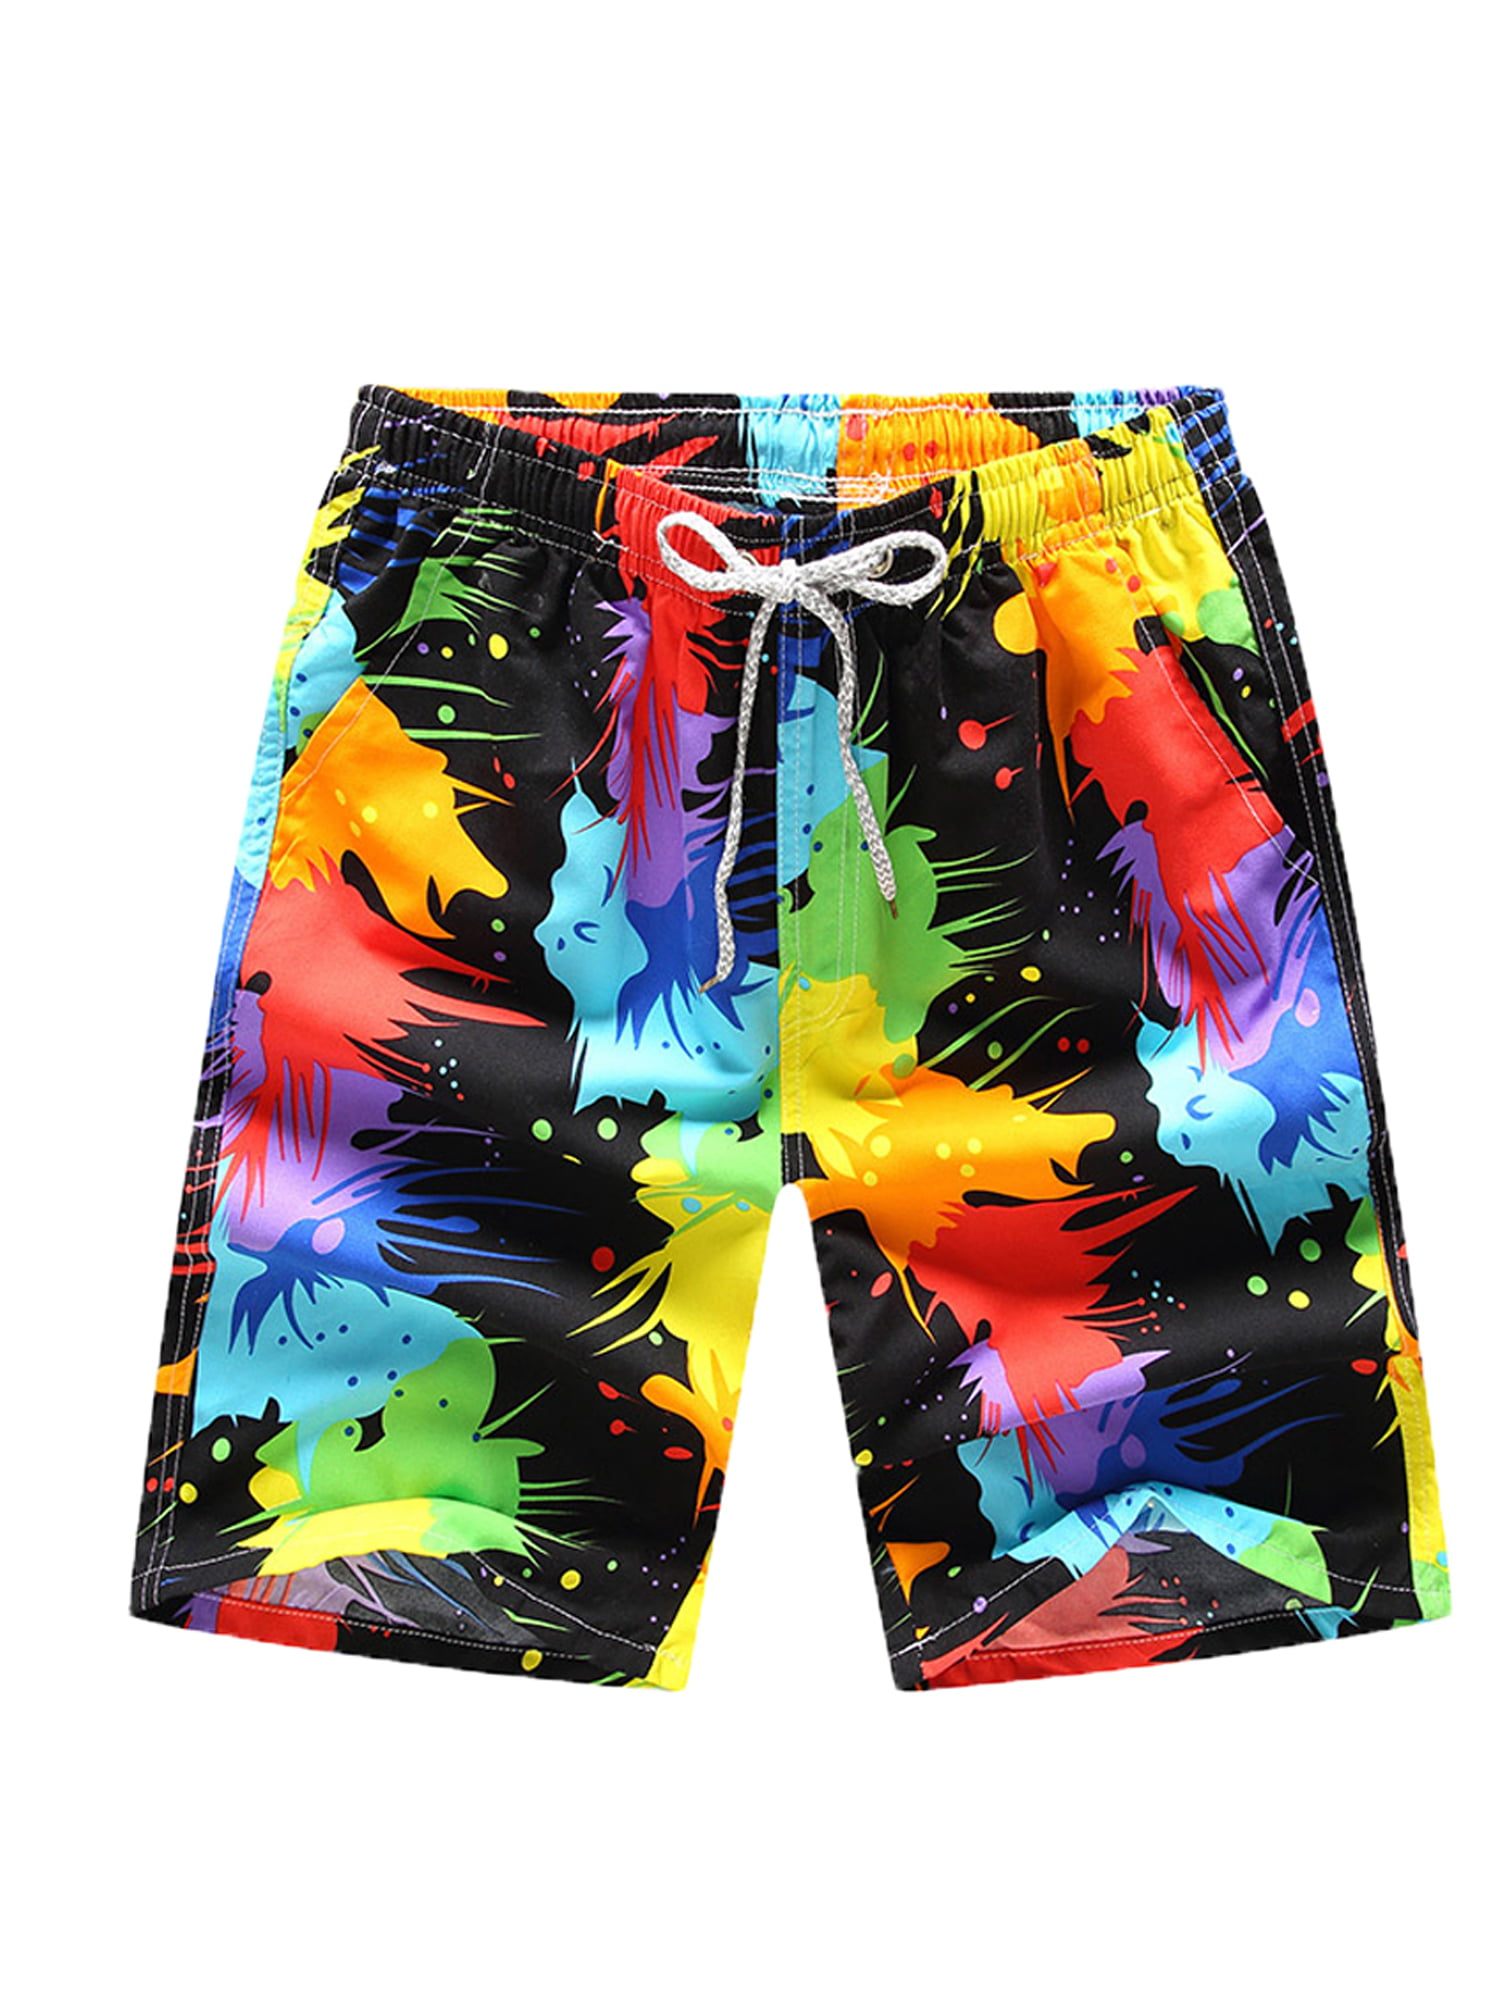 Fashion Men Breathable Trunks Pants Print Swimming Underwear Running Surfing Sports Beach Shorts Board Pants 